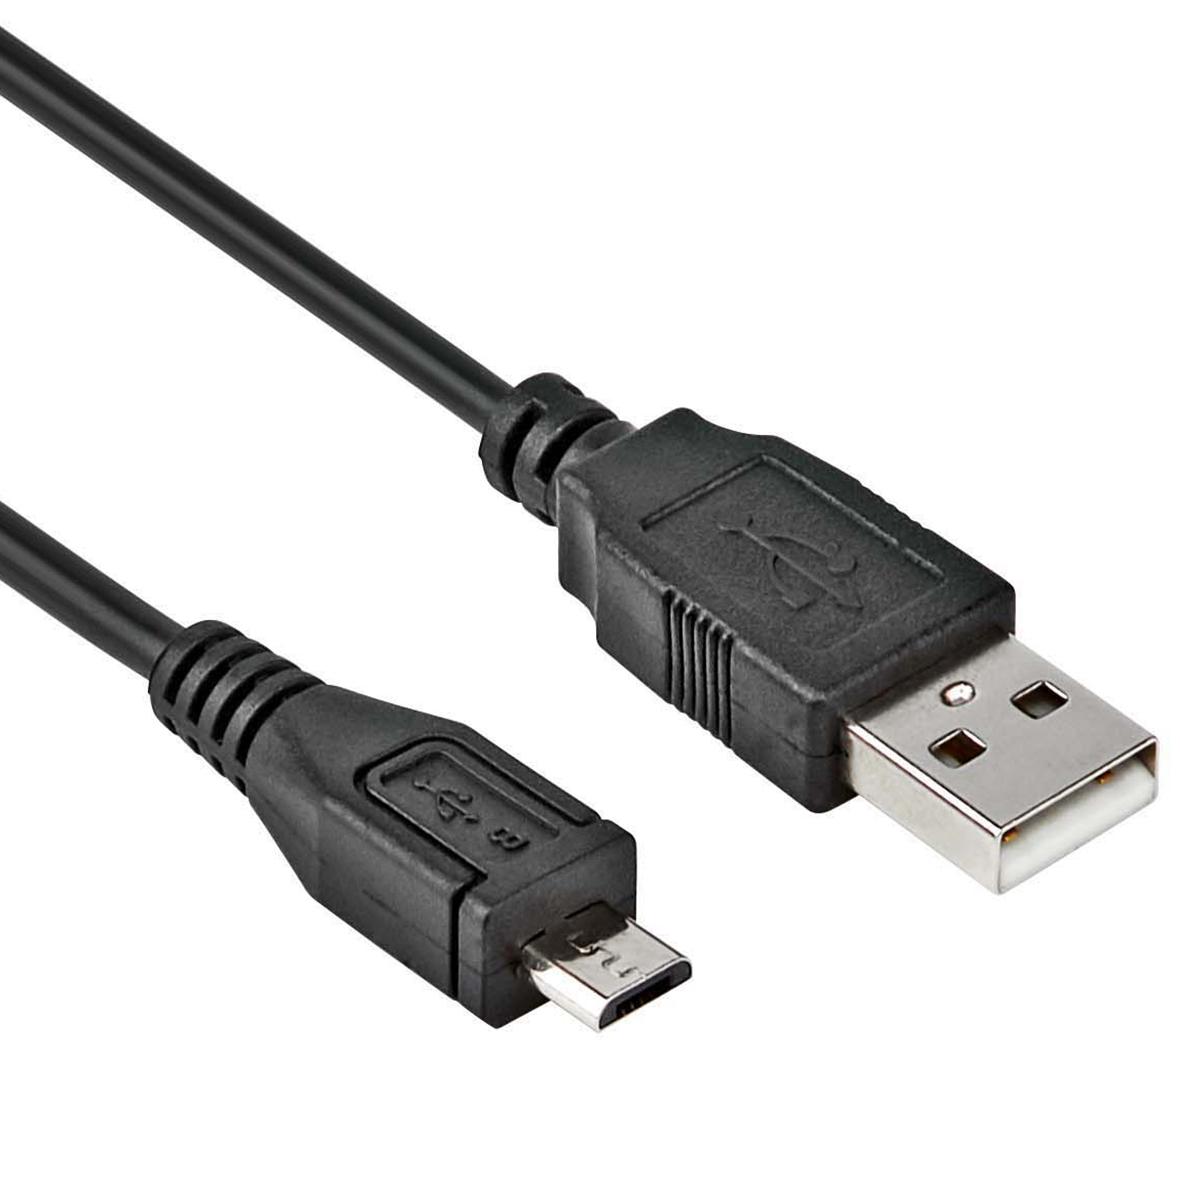 USB Micro kabel - 0.15 meter - Zwart - Allteq